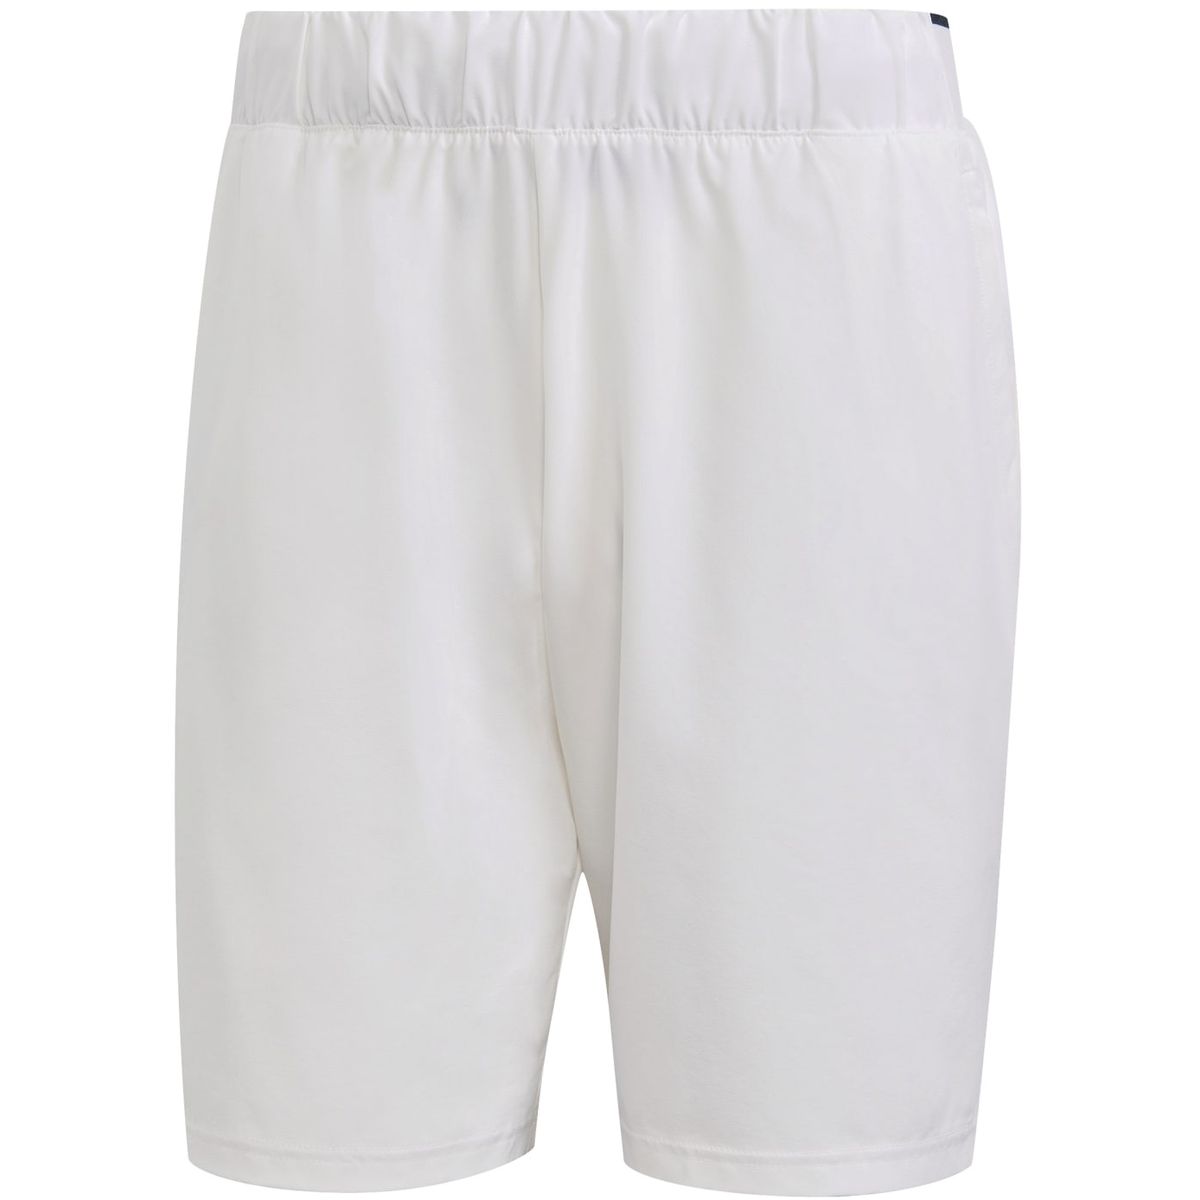 Adidas Club Stretch-Woven Tennis Shorts 7" Herren